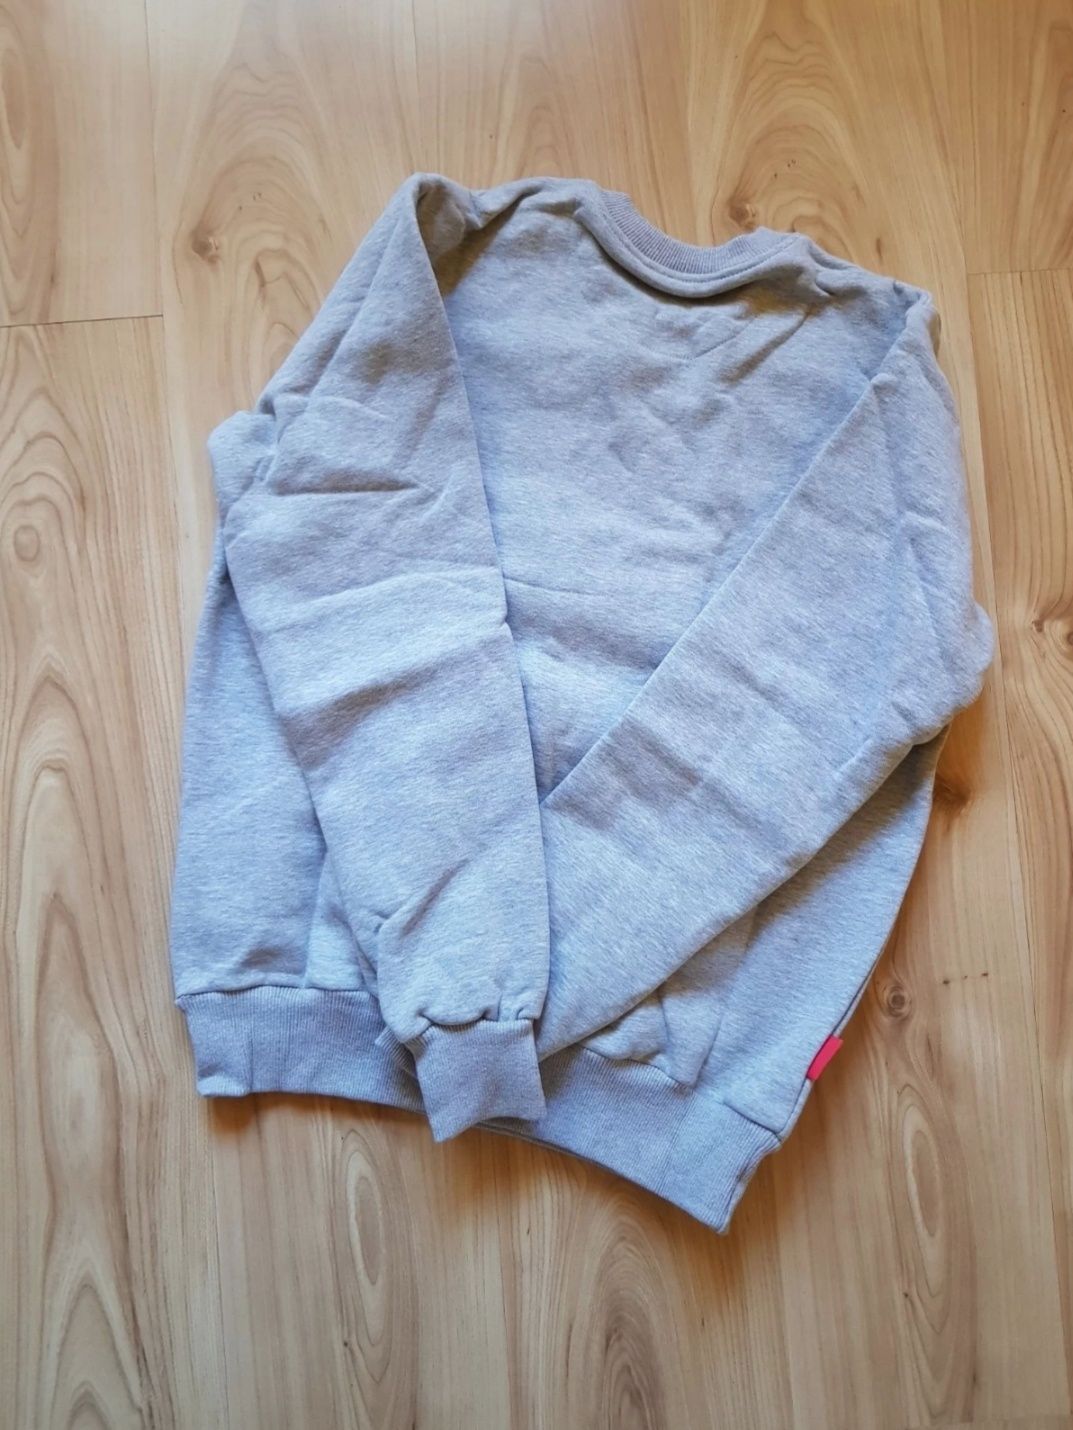 Szara bluza crewnneck, marki Prosto Basick Gray, kolekcja Klasyk